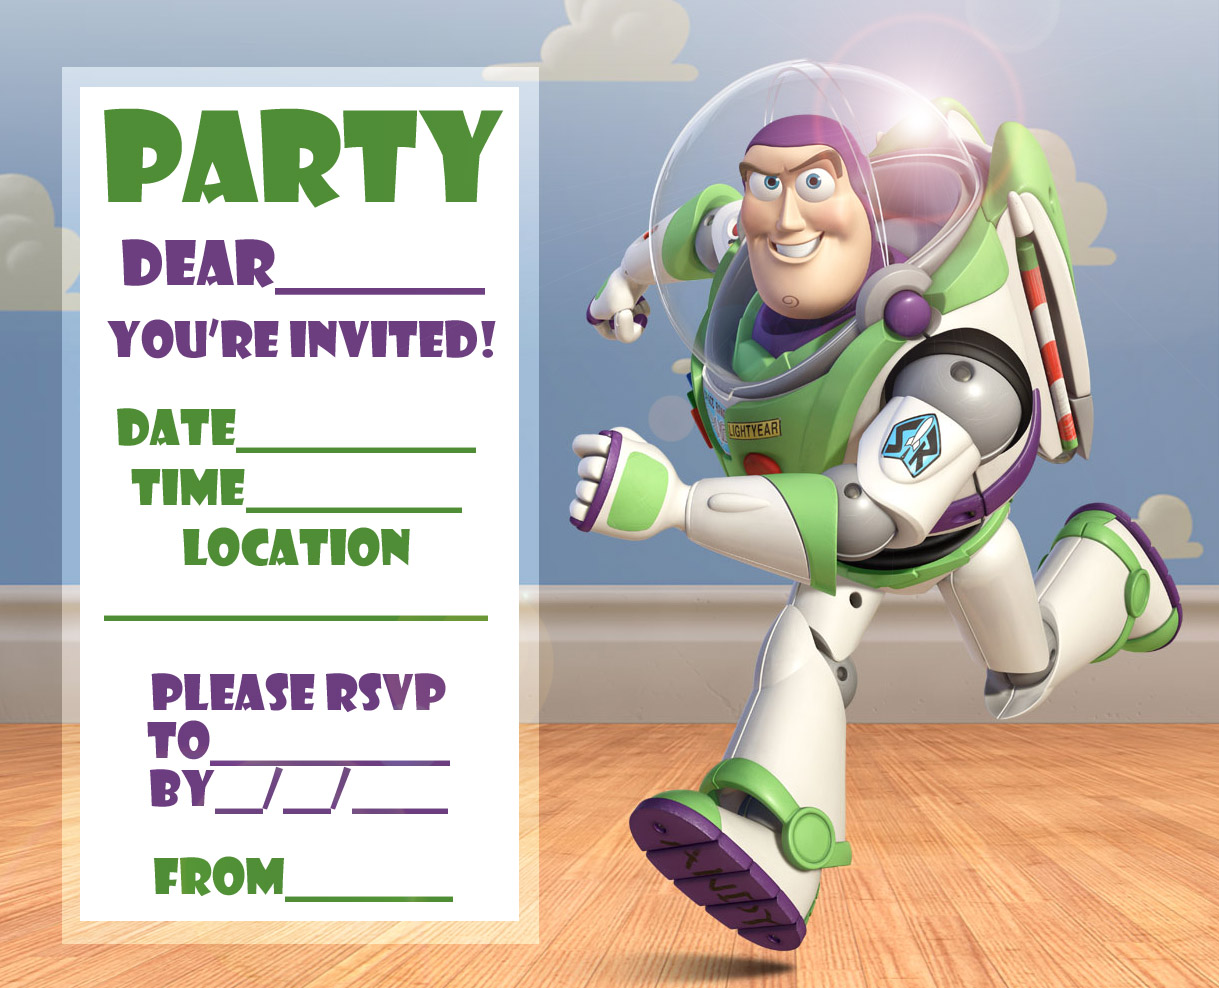 Interactive Magazine BUZZ LIGHTYEAR BIRTHDAY PARTY INVITATION CARD